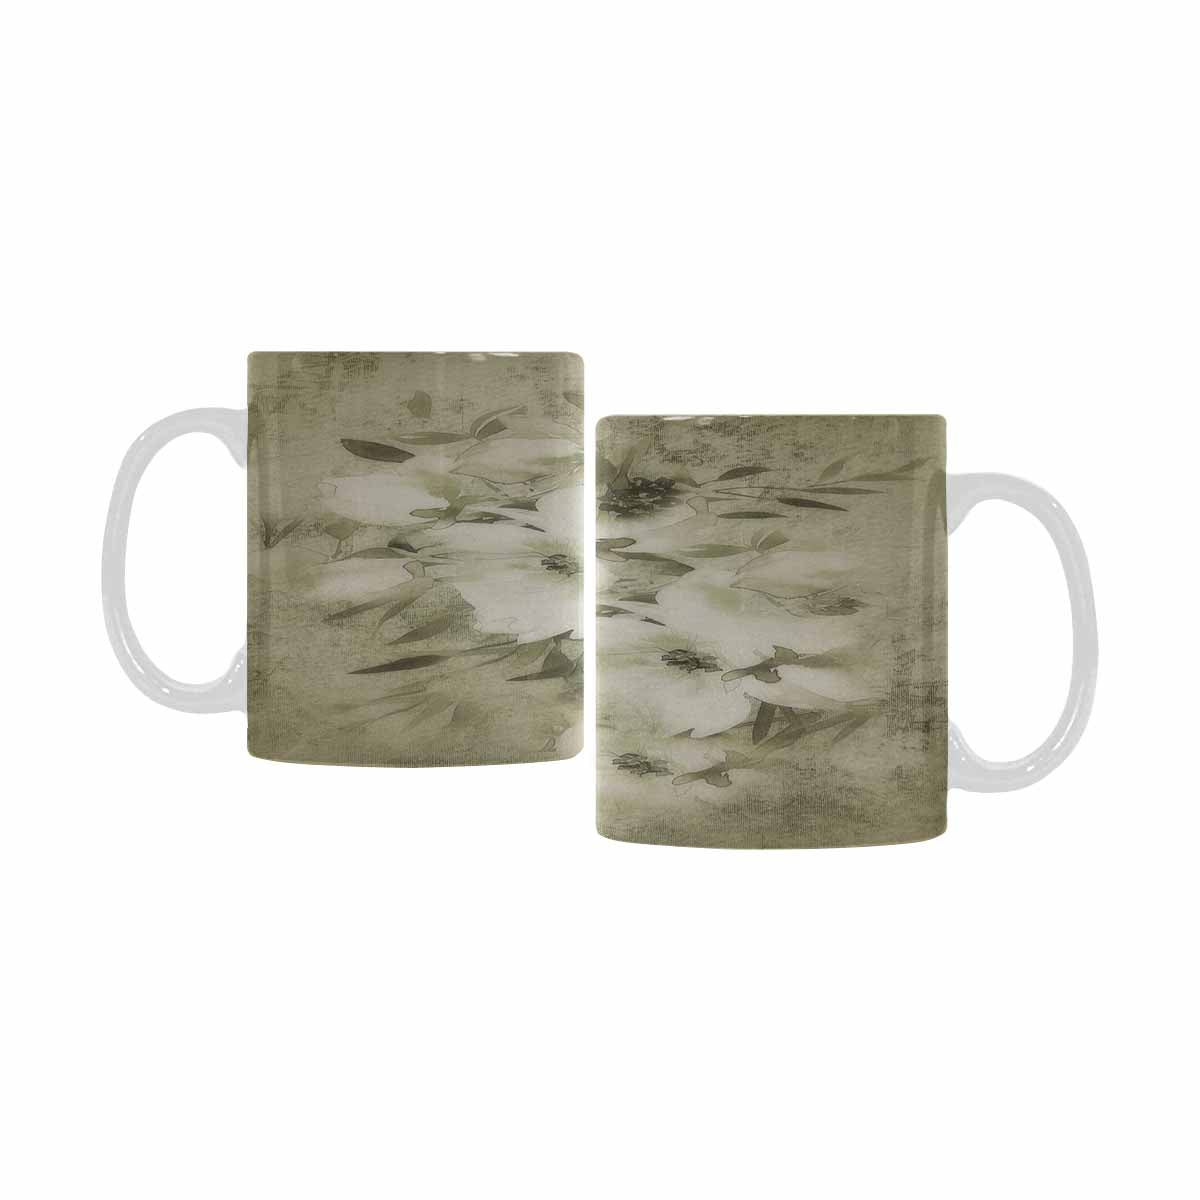 Vintage floral coffee mug or tea cup, Design 03x